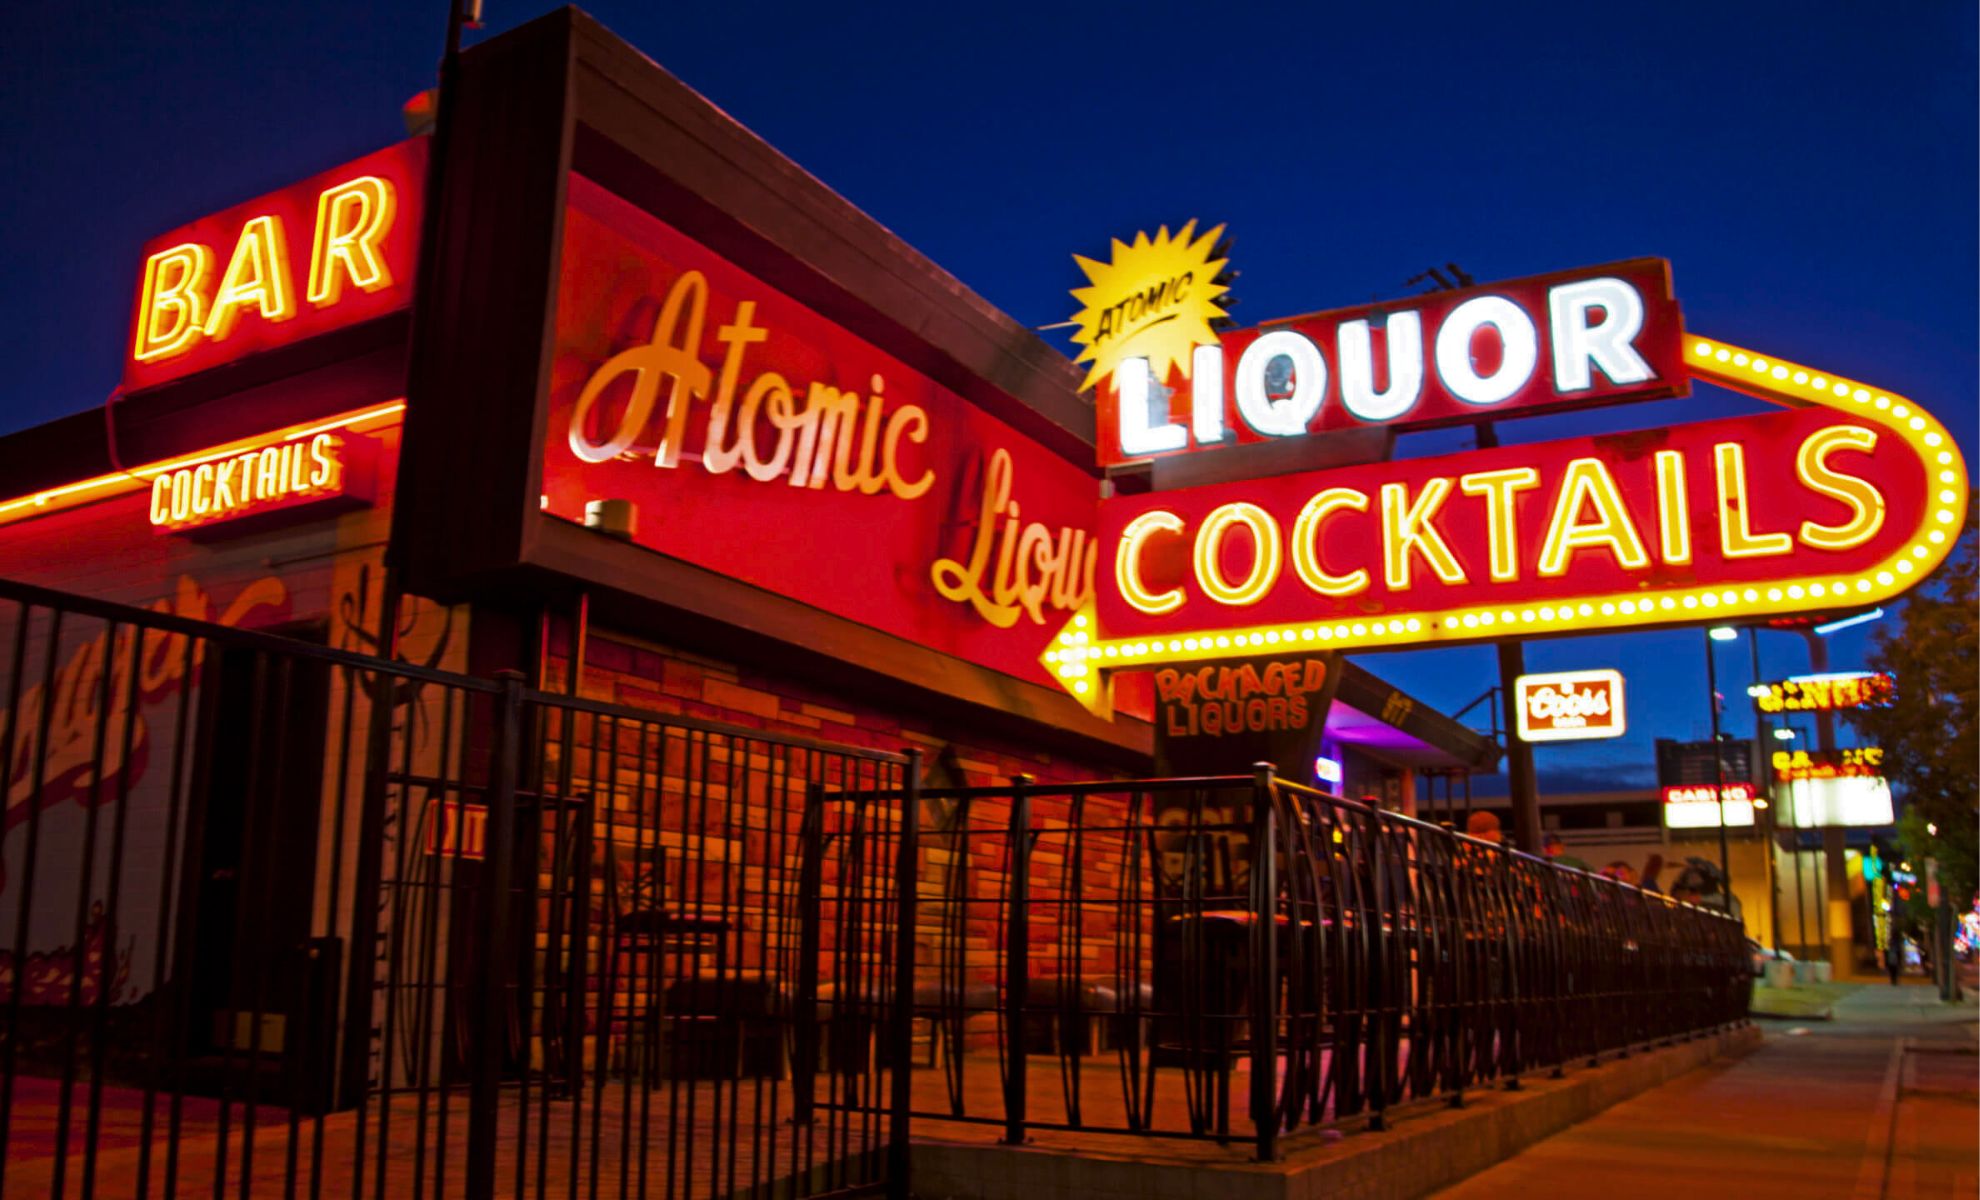 Le bar l'Atomic Liquor, Las Vegas